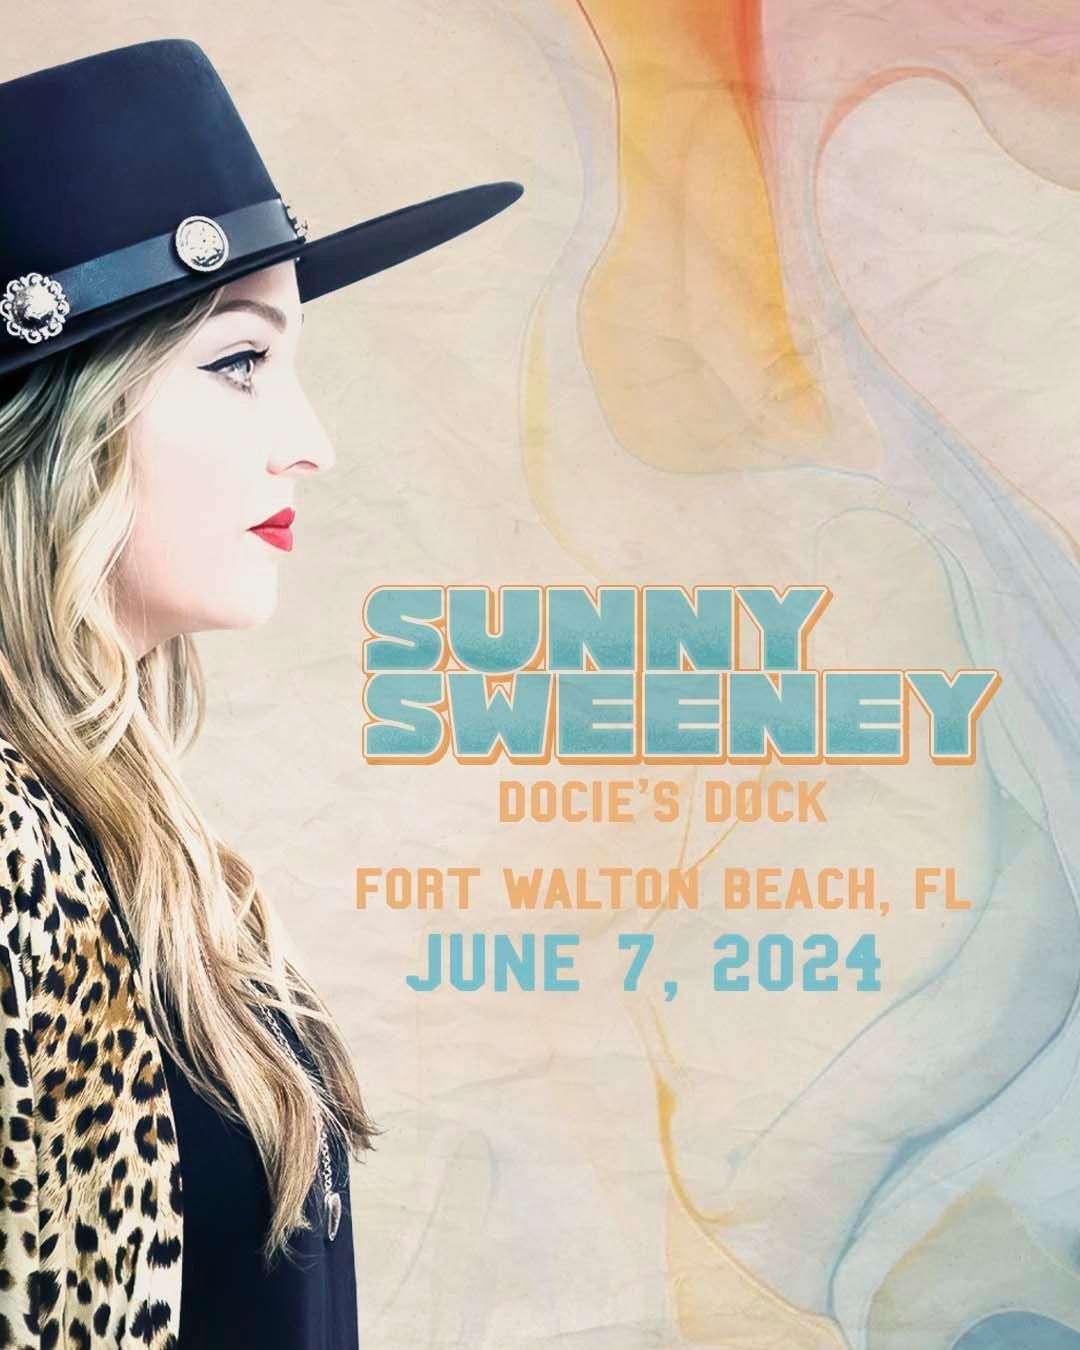 Sunny Sweeney Live at Docie's Dock Fort Walton Beach, FL